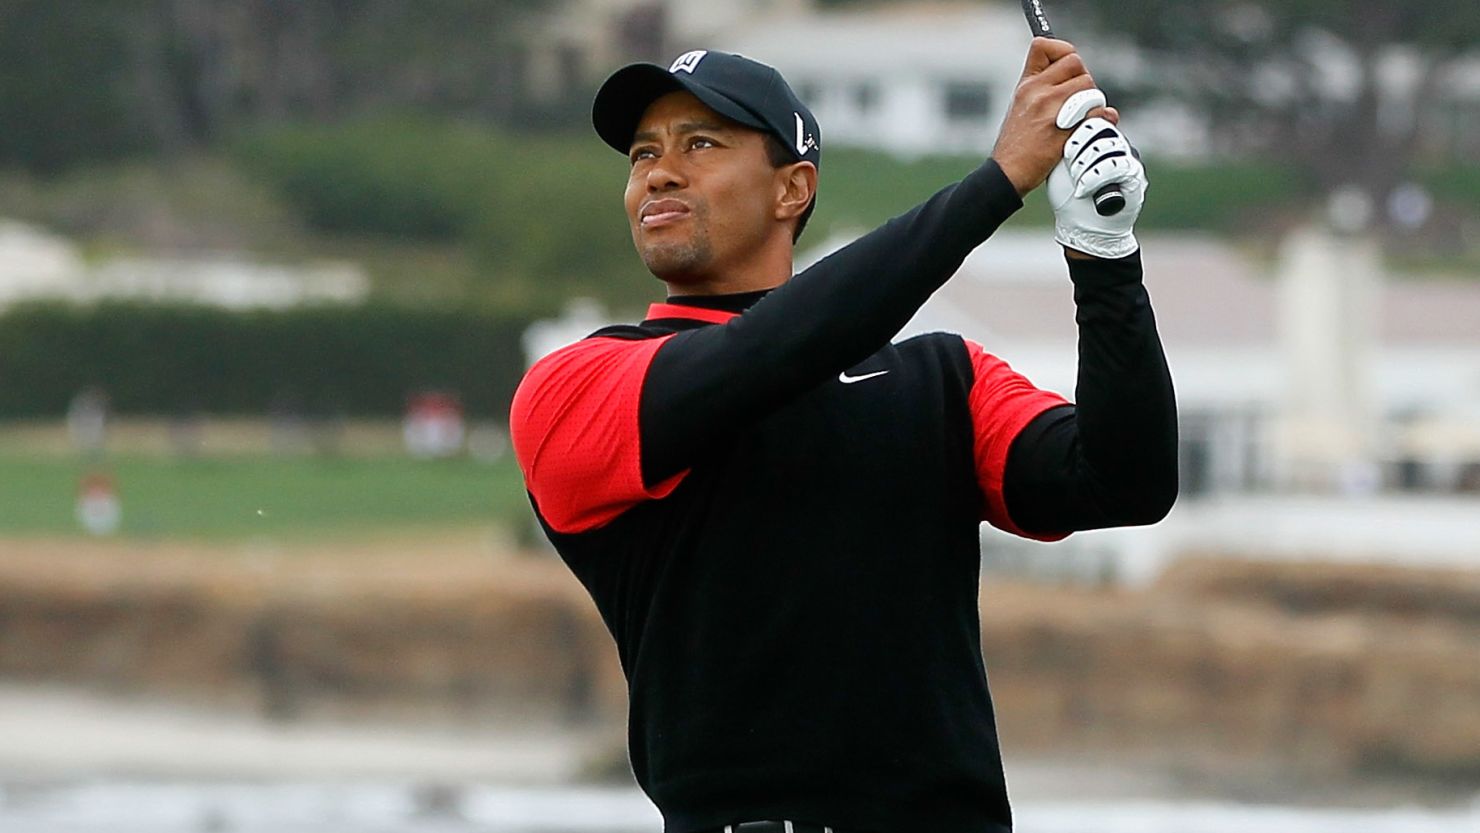 Former world No. 1 Tiger Woods last won a tour-sanctioned tournament in November 2009.